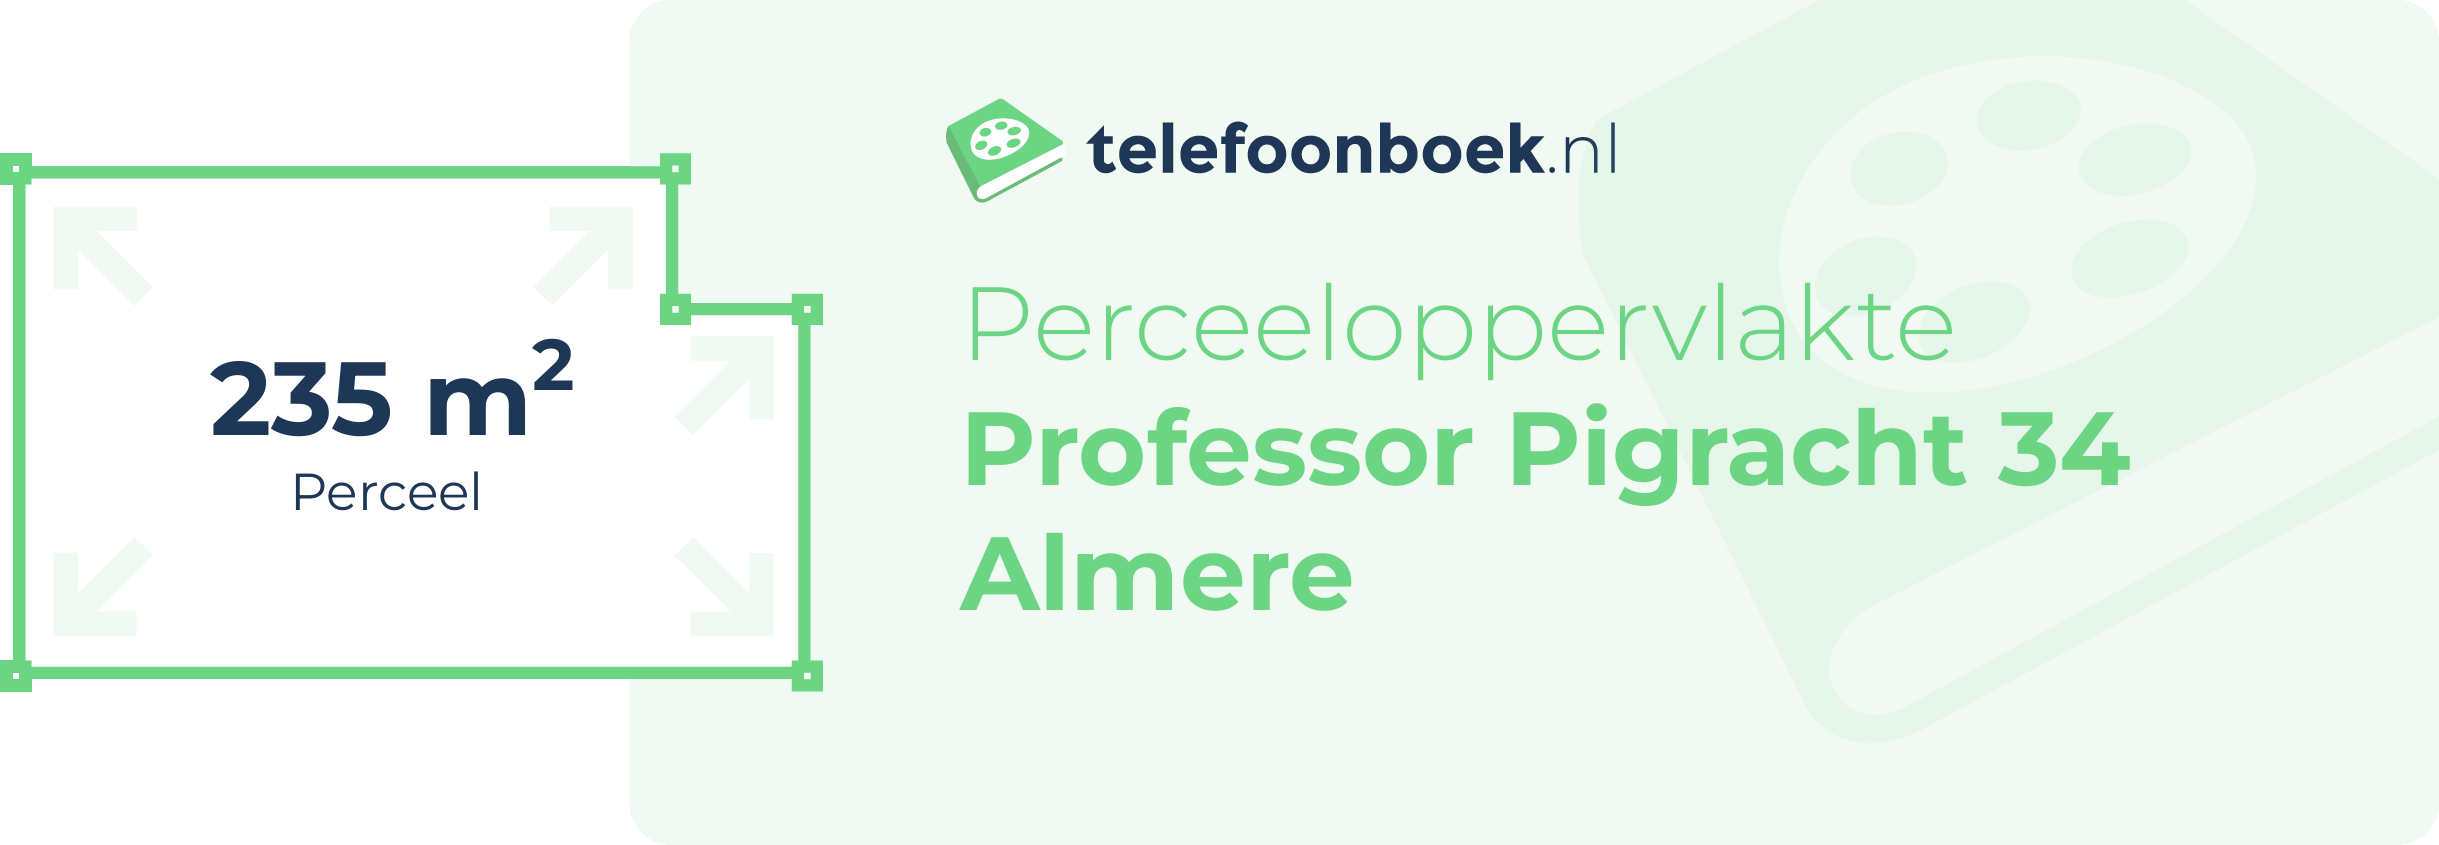 Perceeloppervlakte Professor Pigracht 34 Almere